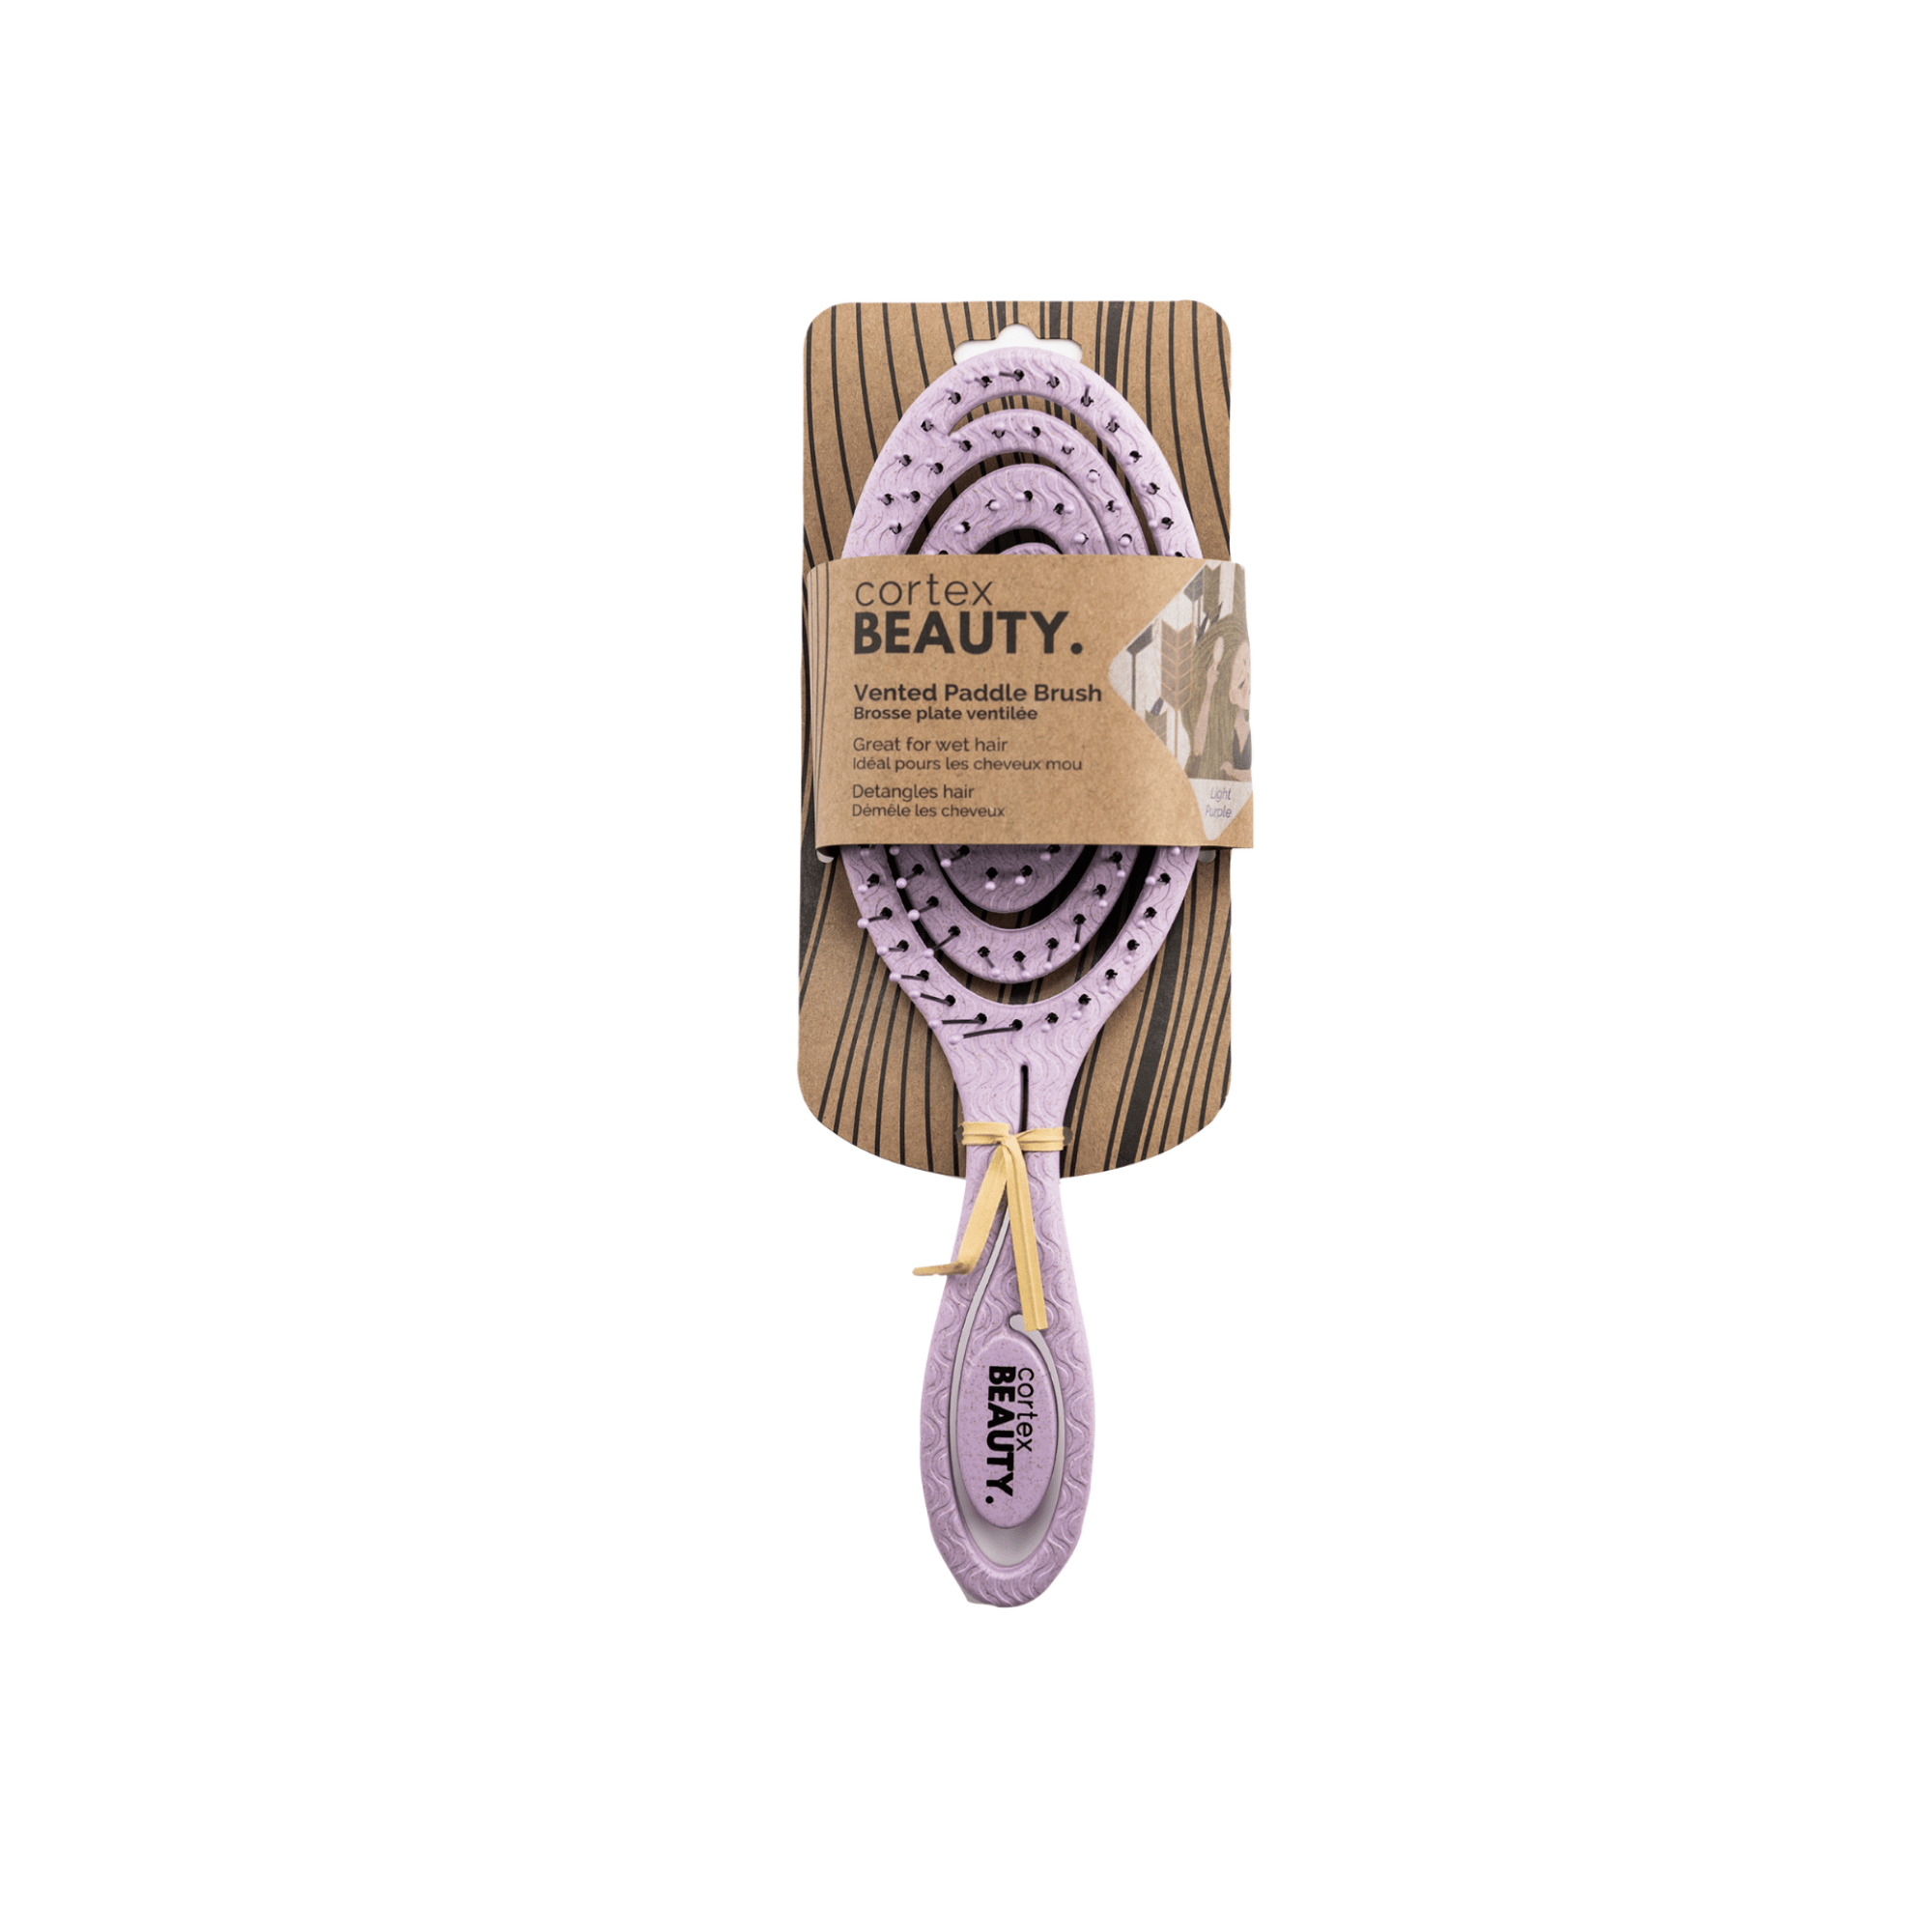 Cortex Beauty Eco-Friendly Detangle Brush - Detangle Your Hair While Massaging Your Scalp